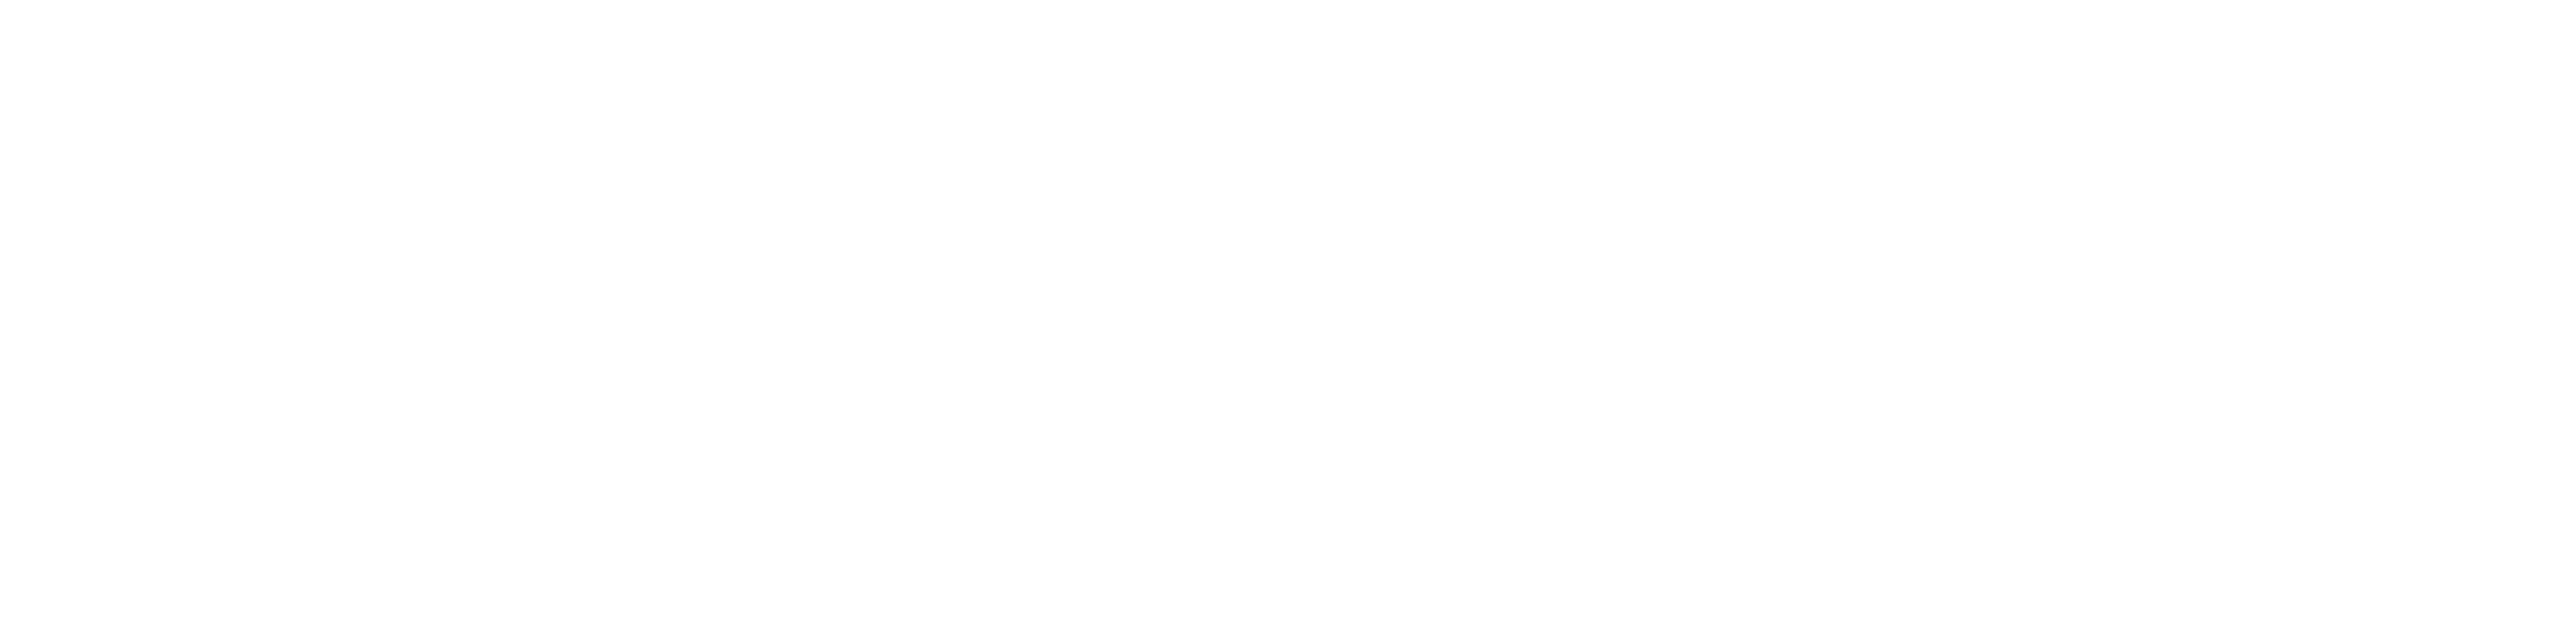 Health Tech Hub Copenhagen